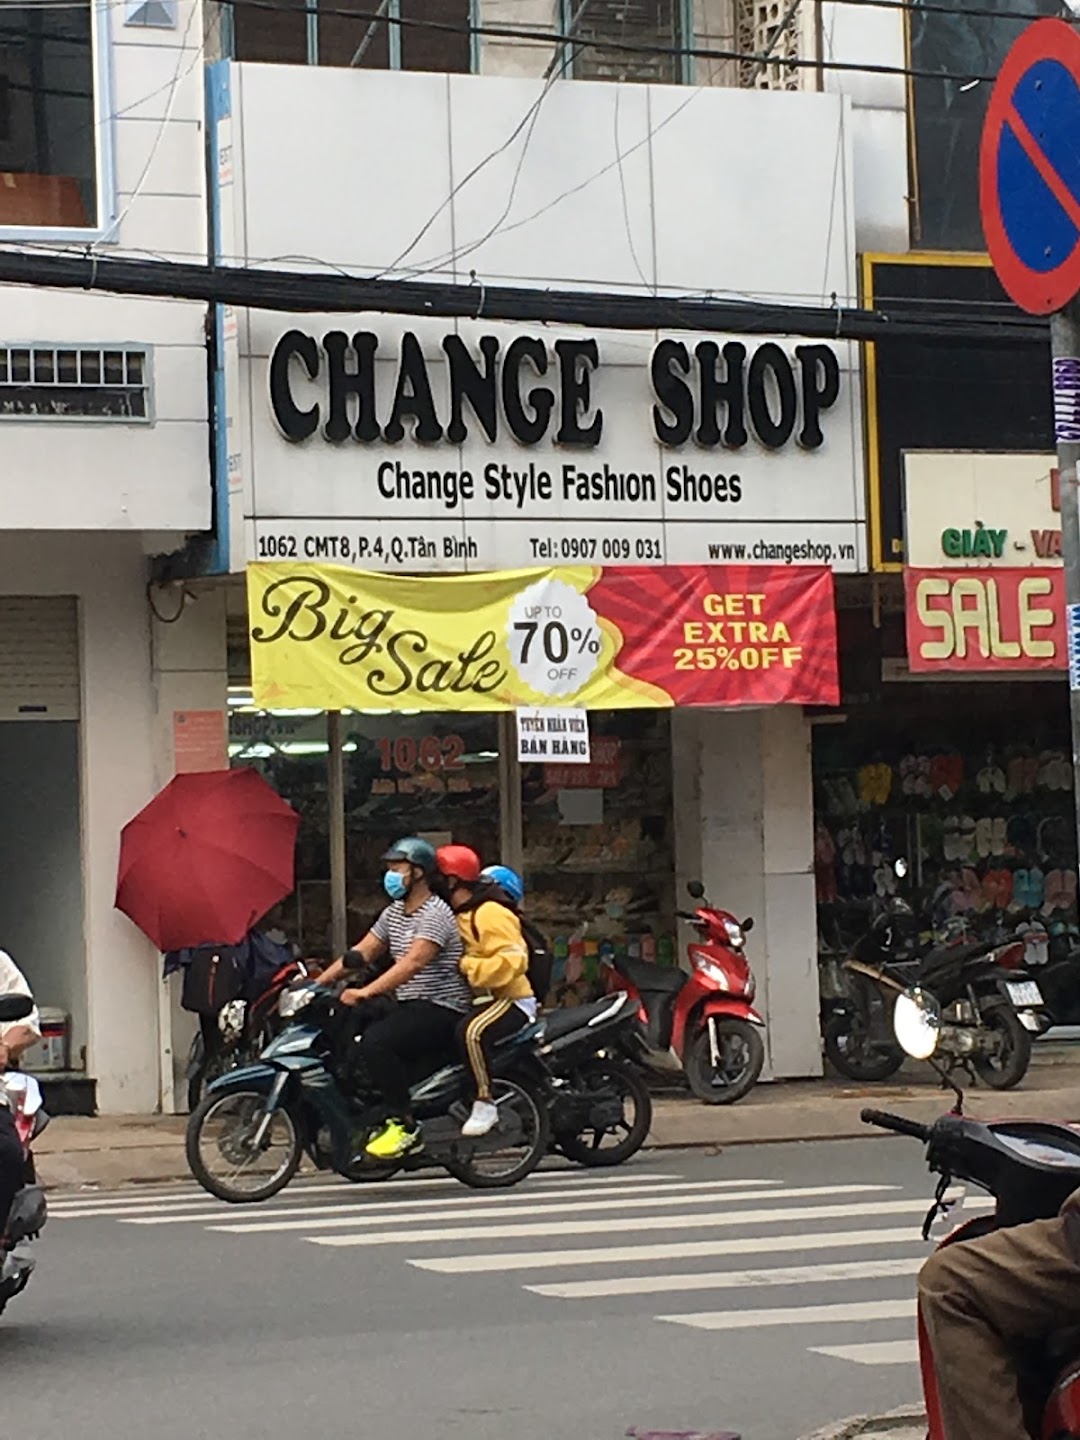 Change shop (change style fashion shoes)